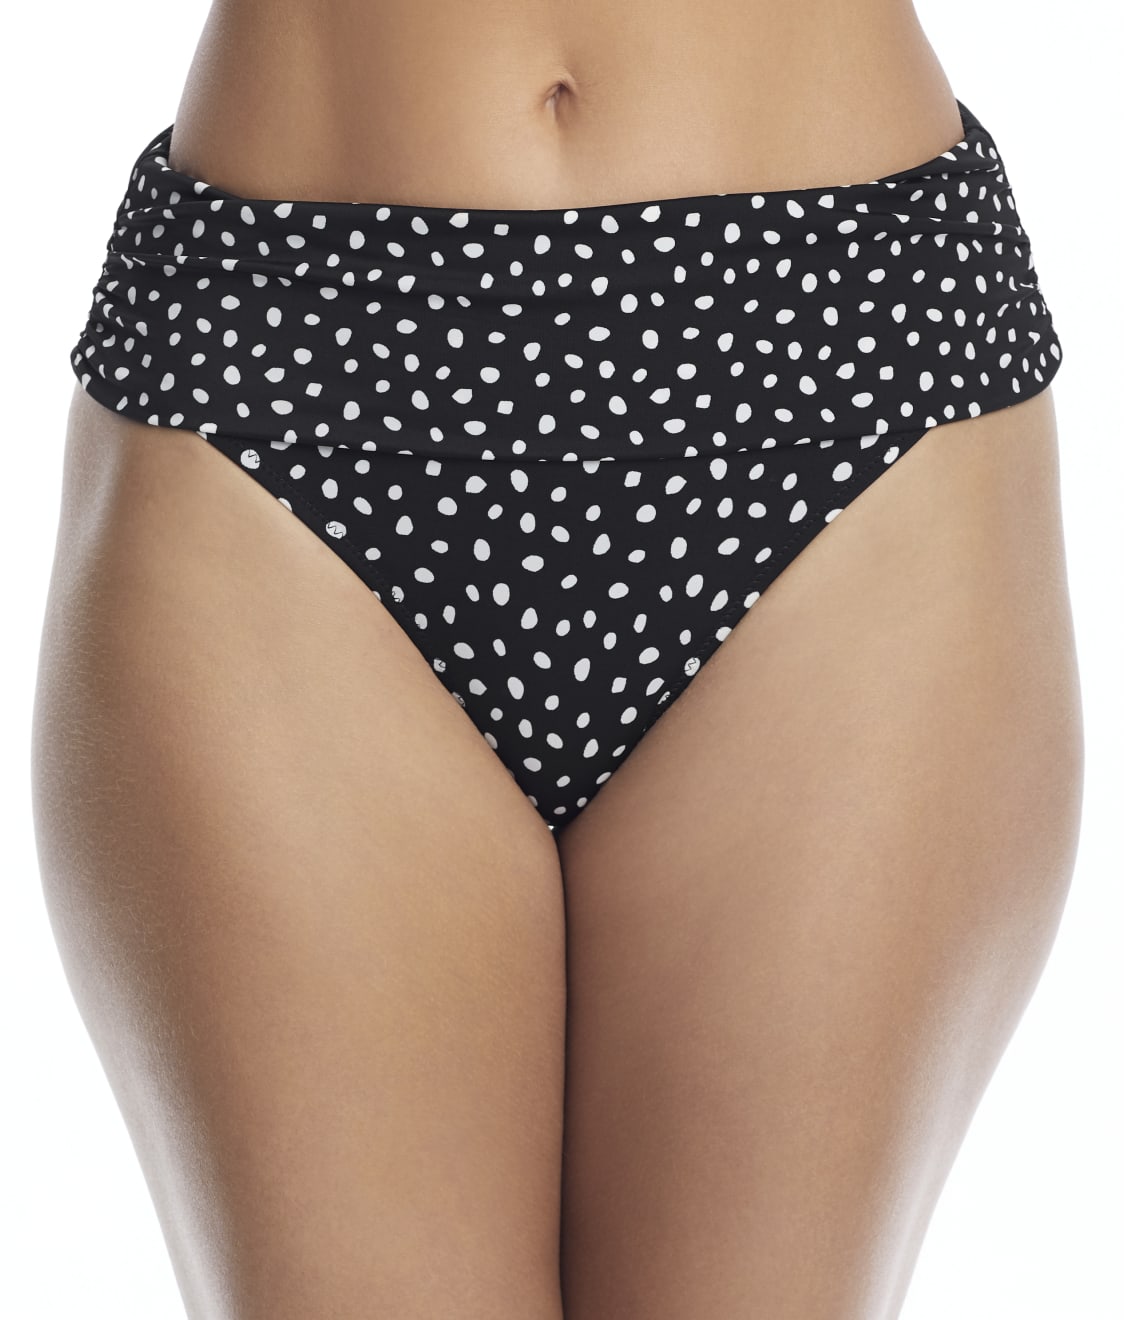 Pour Moi: Hot Spots Fold-Over Bikini Bottom 3908-BKWHT